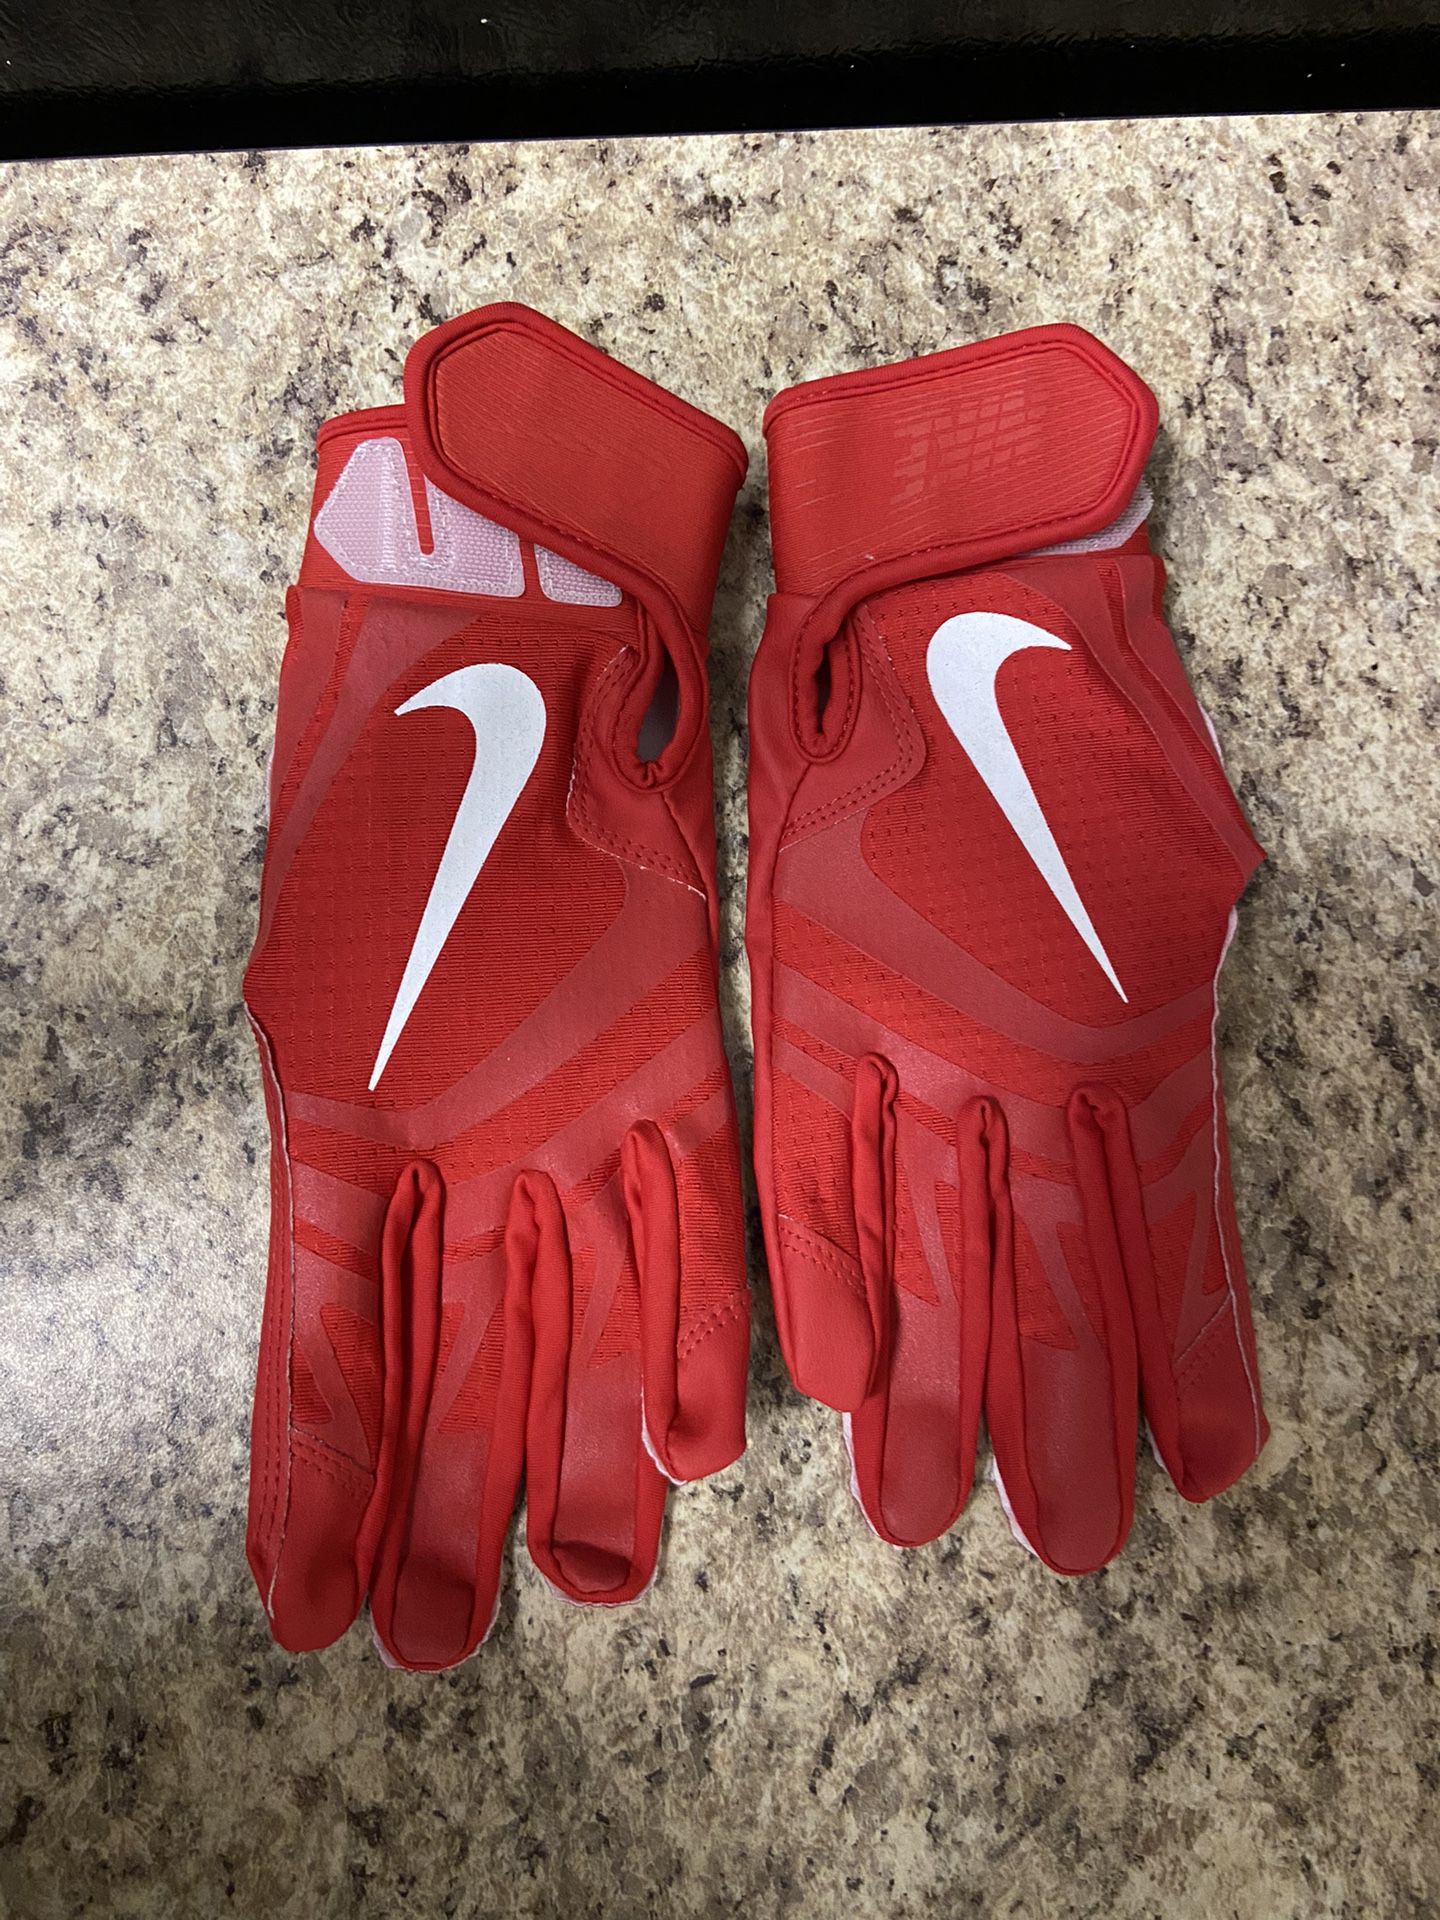 Nike Batting Gloves . Size Small.